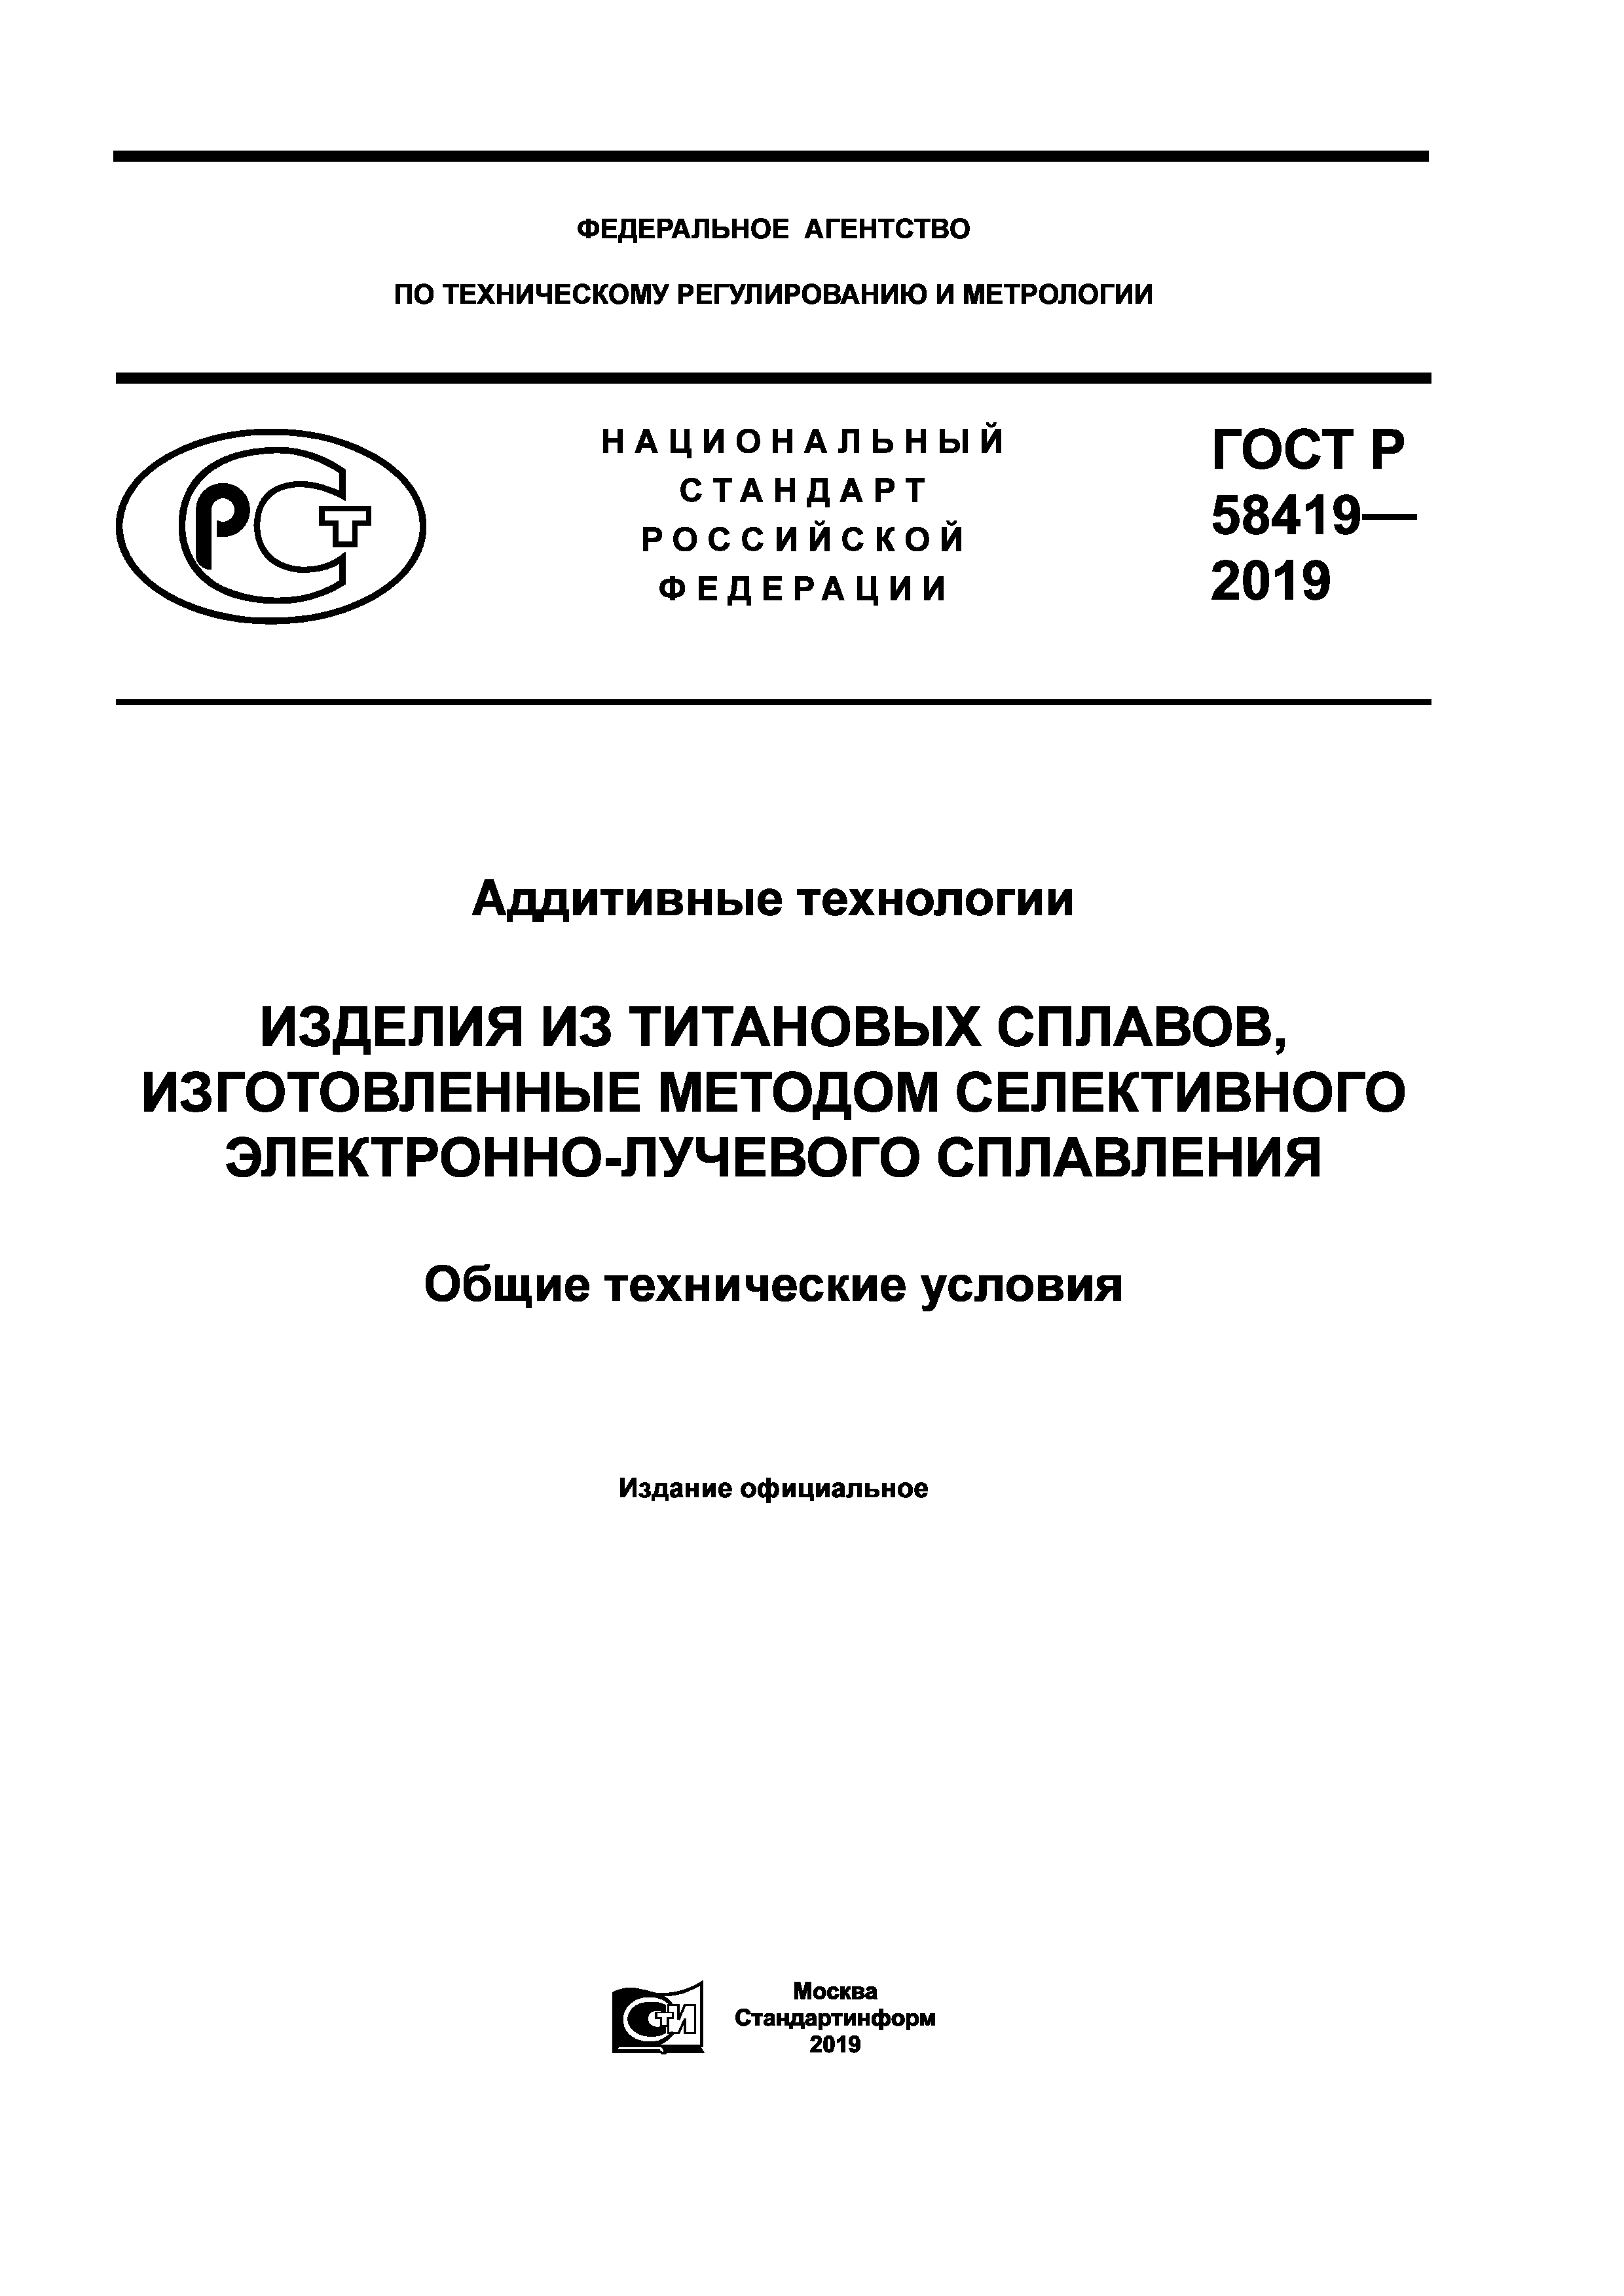 ГОСТ Р 58419-2019